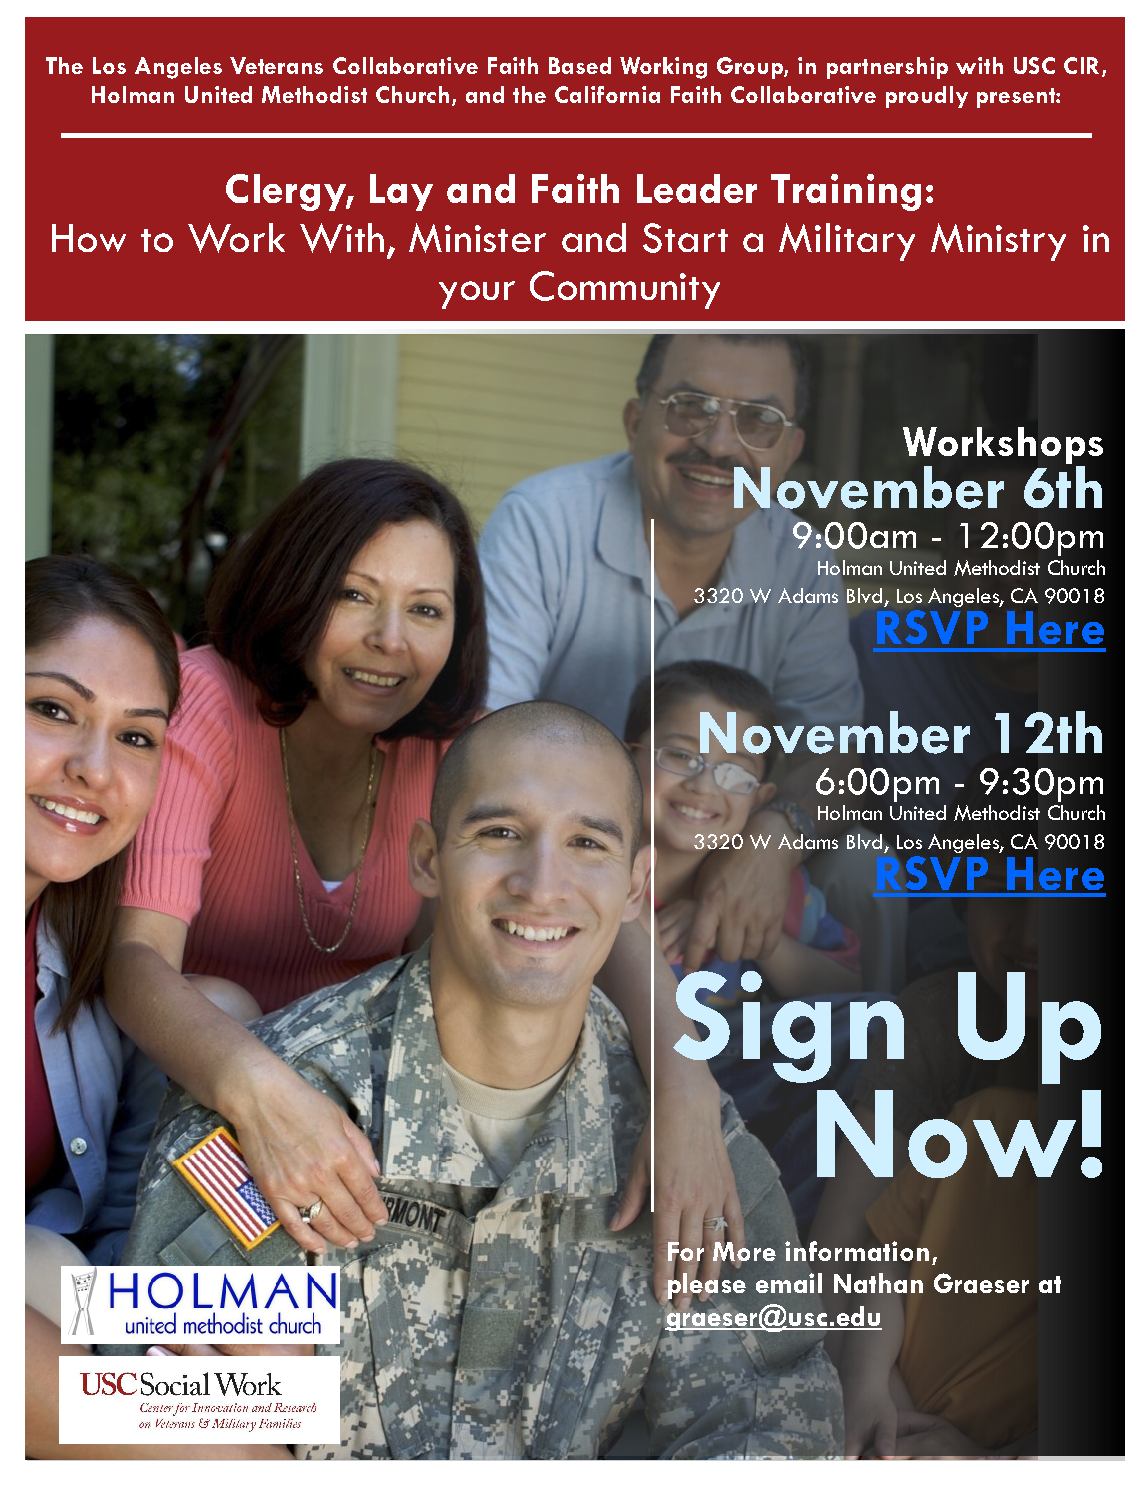 LAVC_Faith Communities_Workshops_Nov 6th12Flyer_Page_1